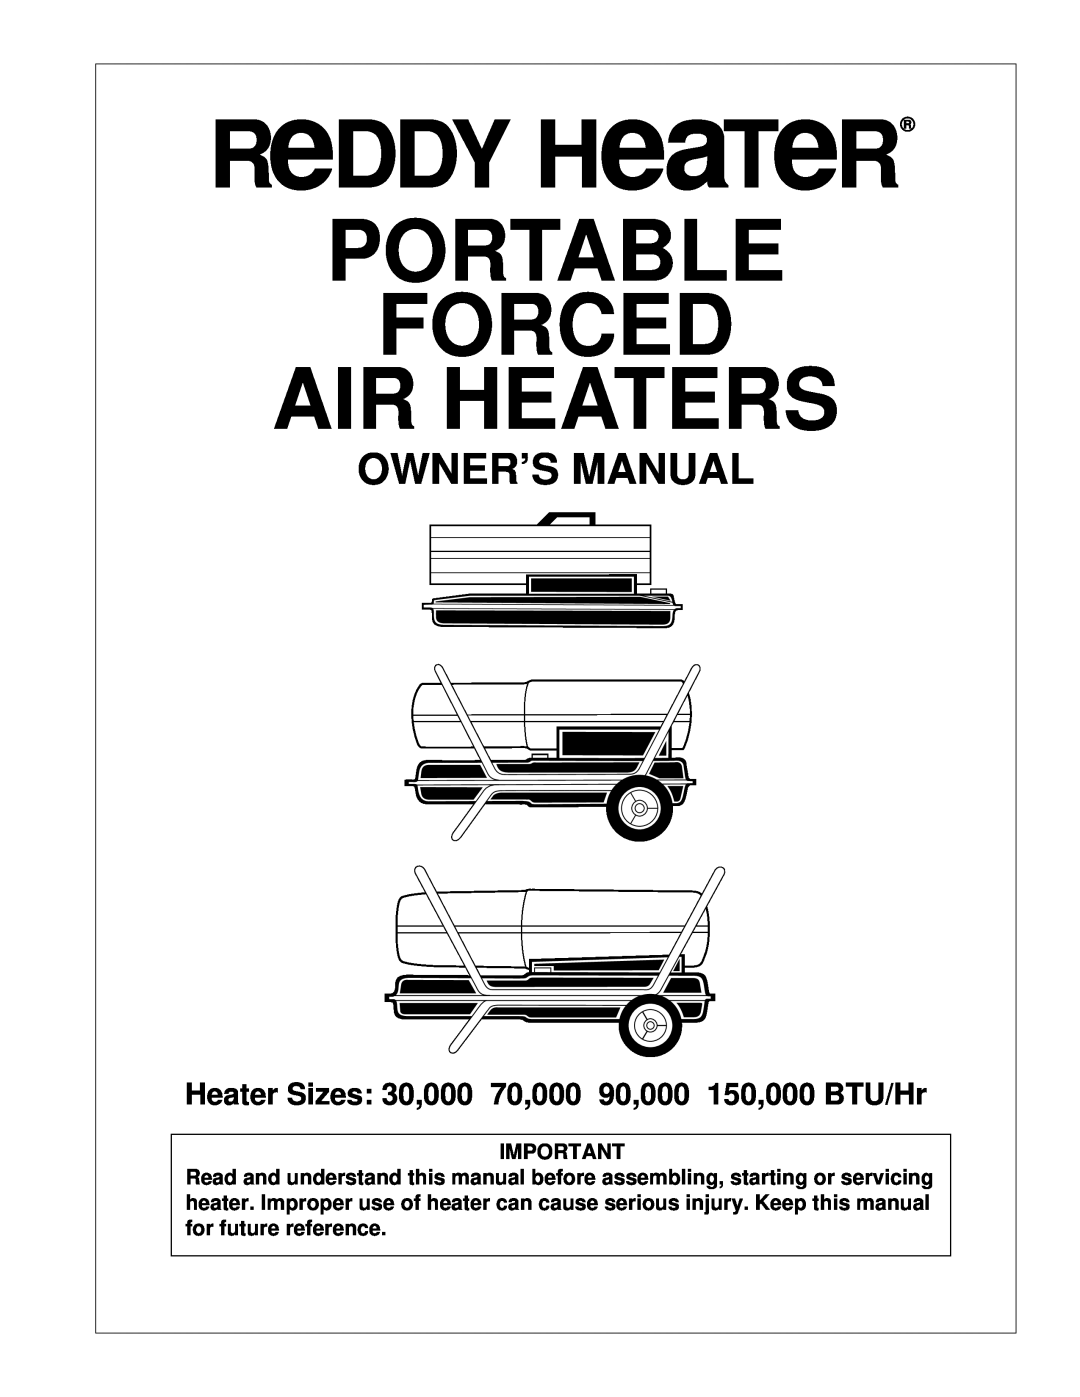 Desa owner manual Heater Sizes 30,000 70,000 90,000 150,000 BTU/Hr, ReDDY HeaTeR, Portable G Forced Air Heaters, Side 